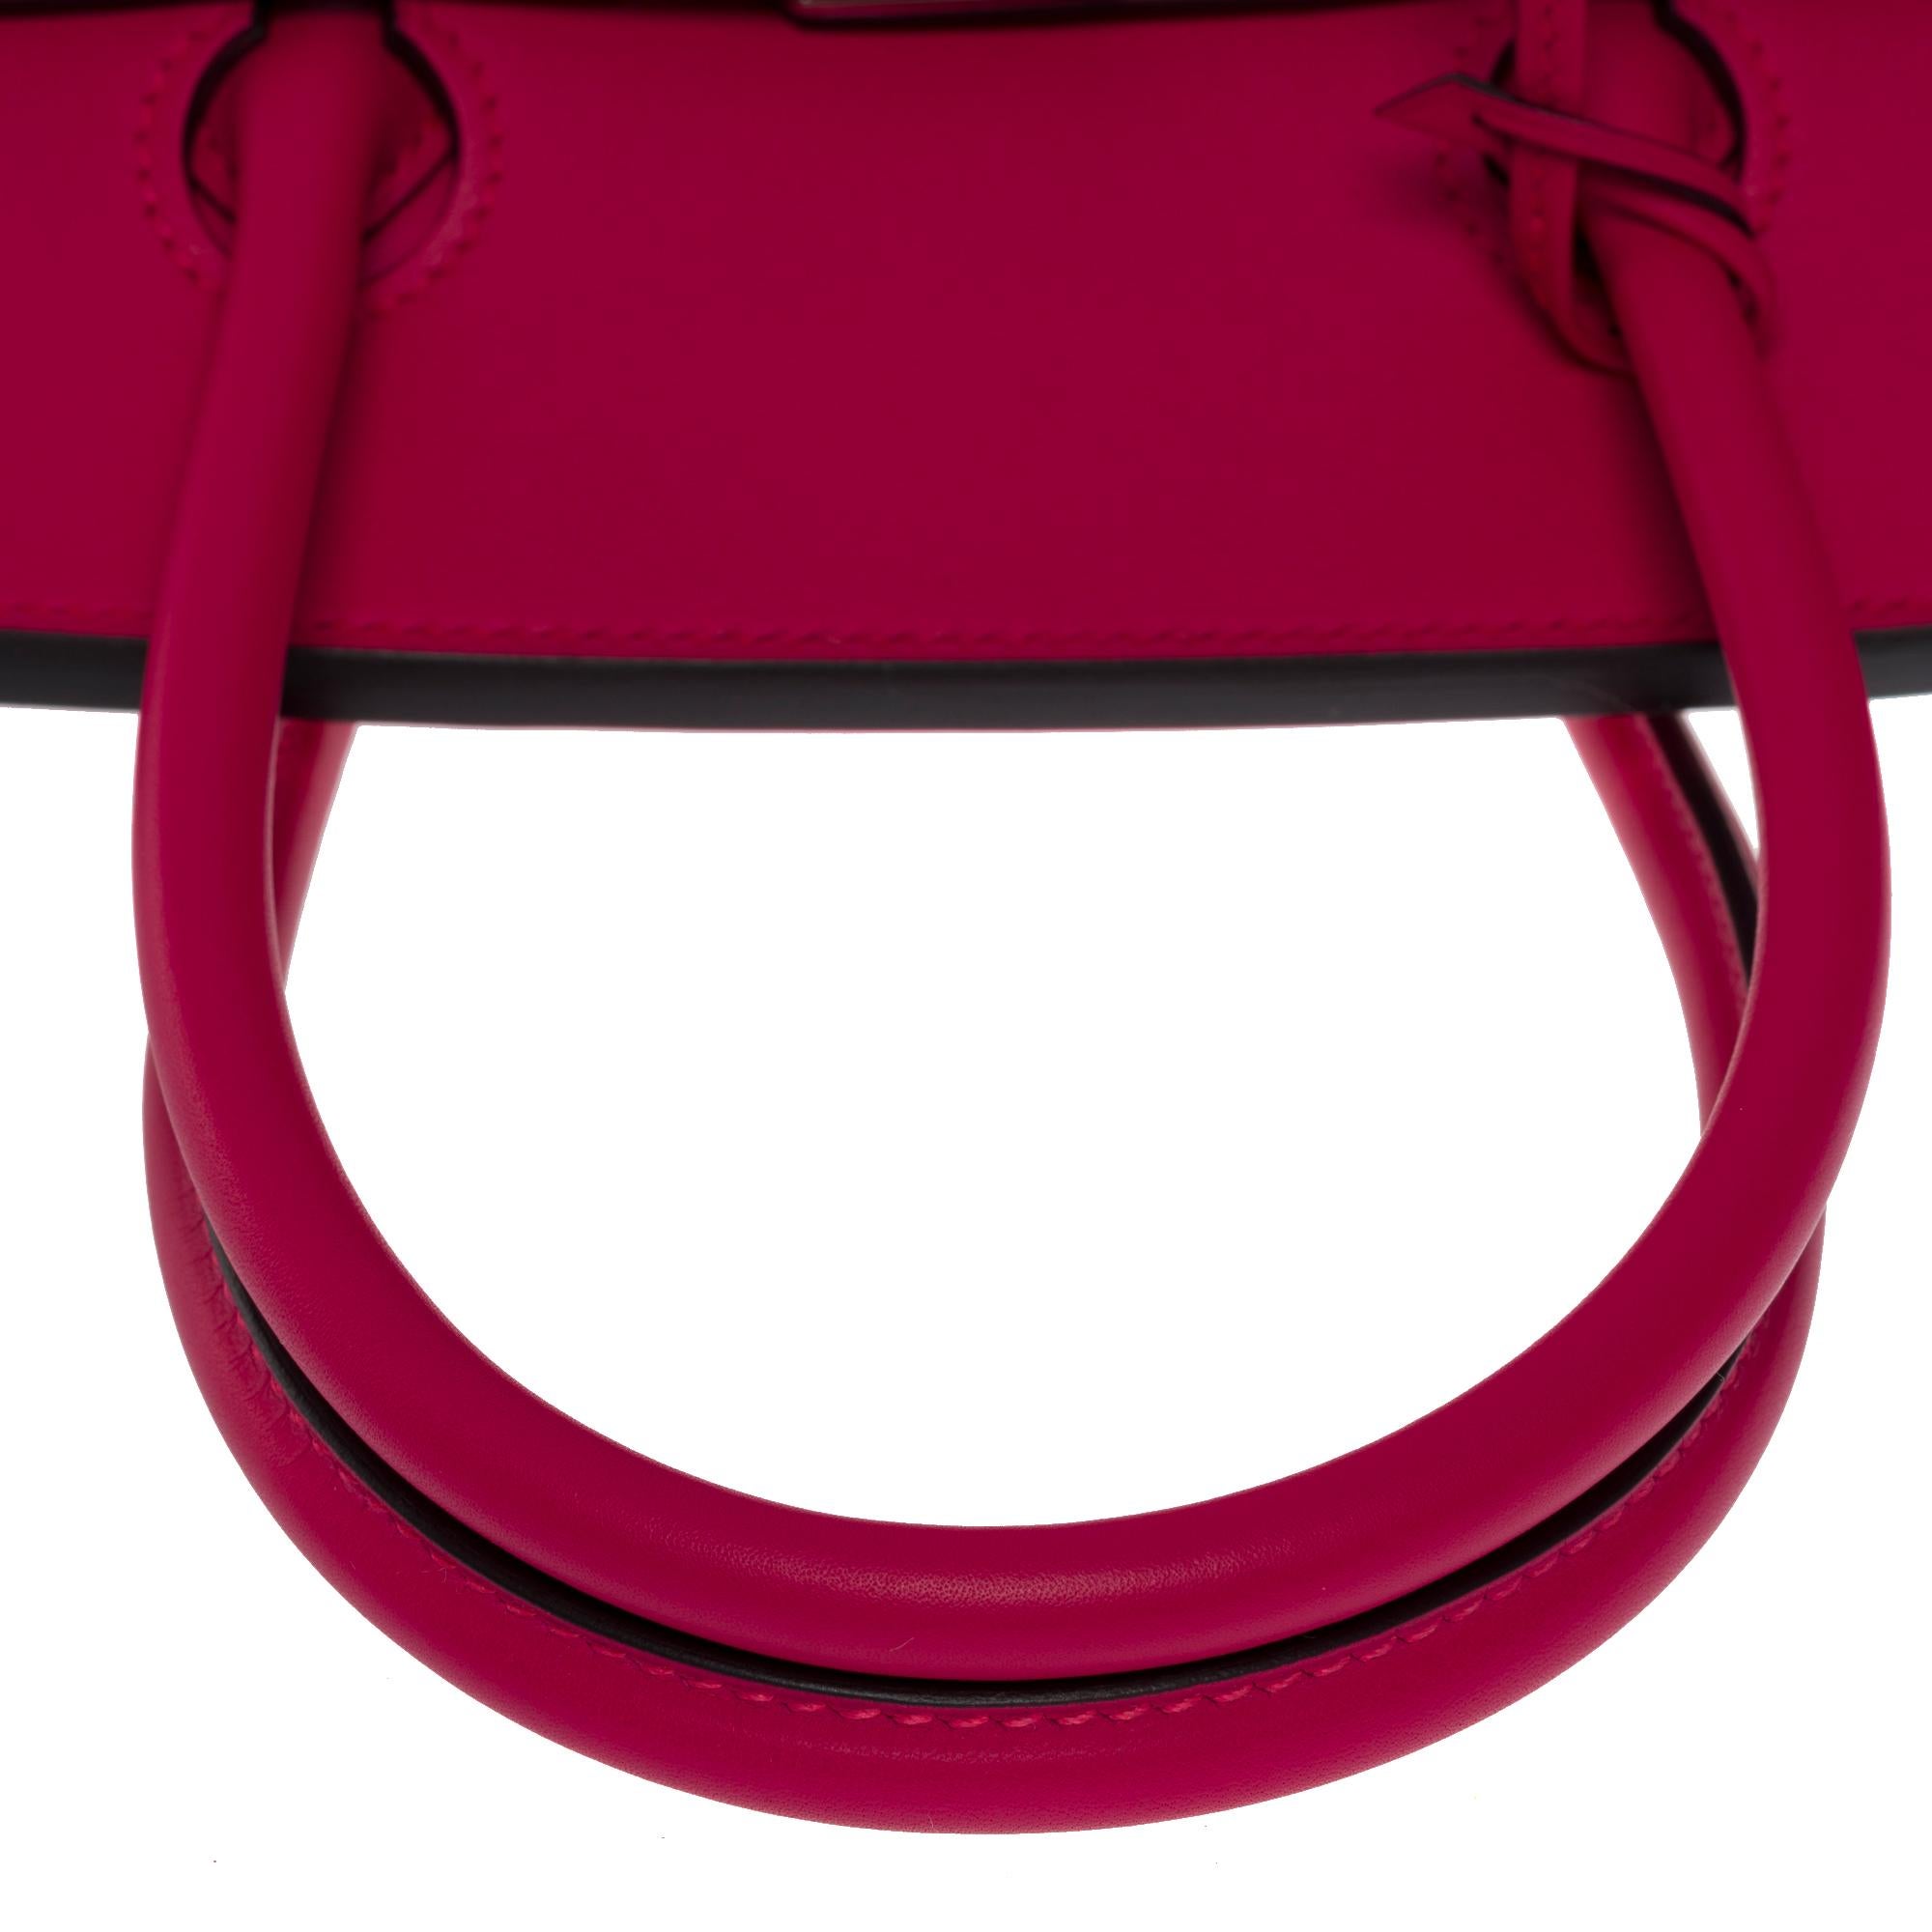 New Fray Fray Hermès Birkin 35 handbag in beige canvas/Pink swift leather, SHW For Sale 4